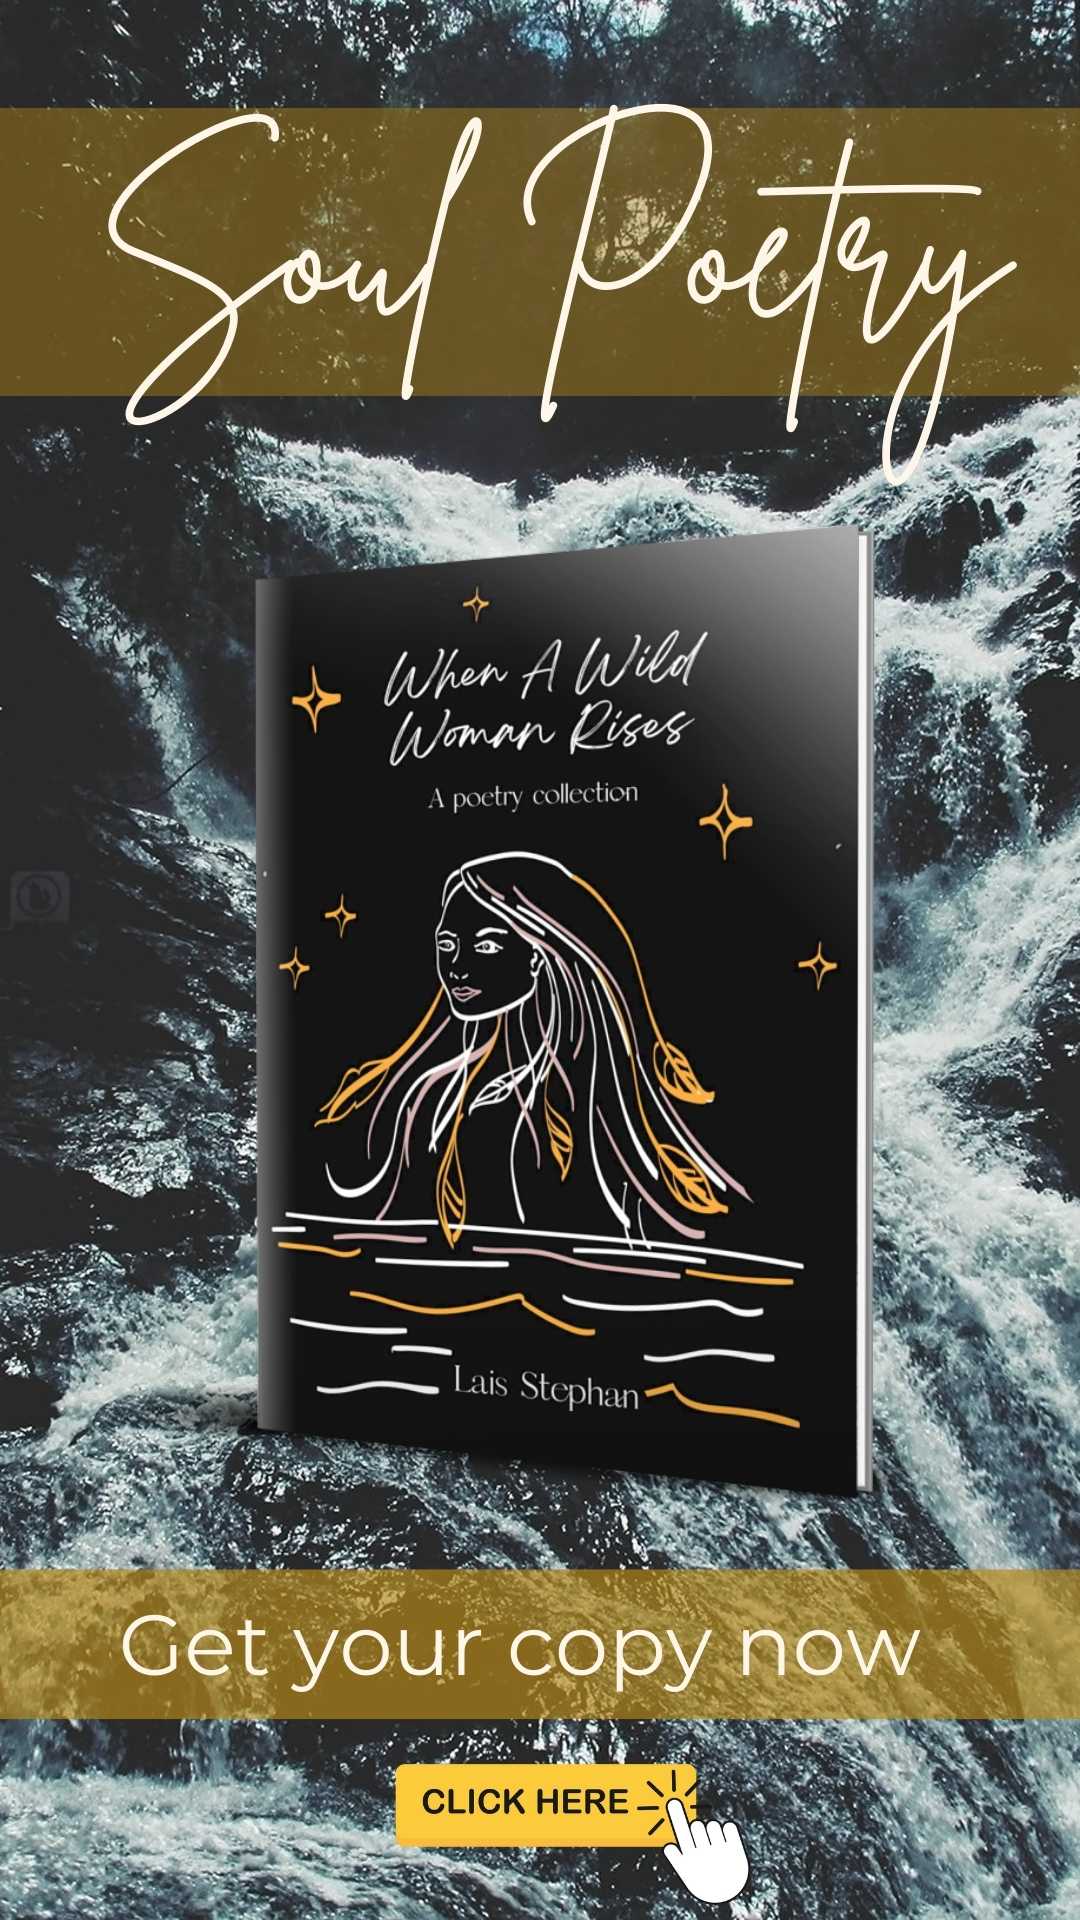 When a wild woman rises